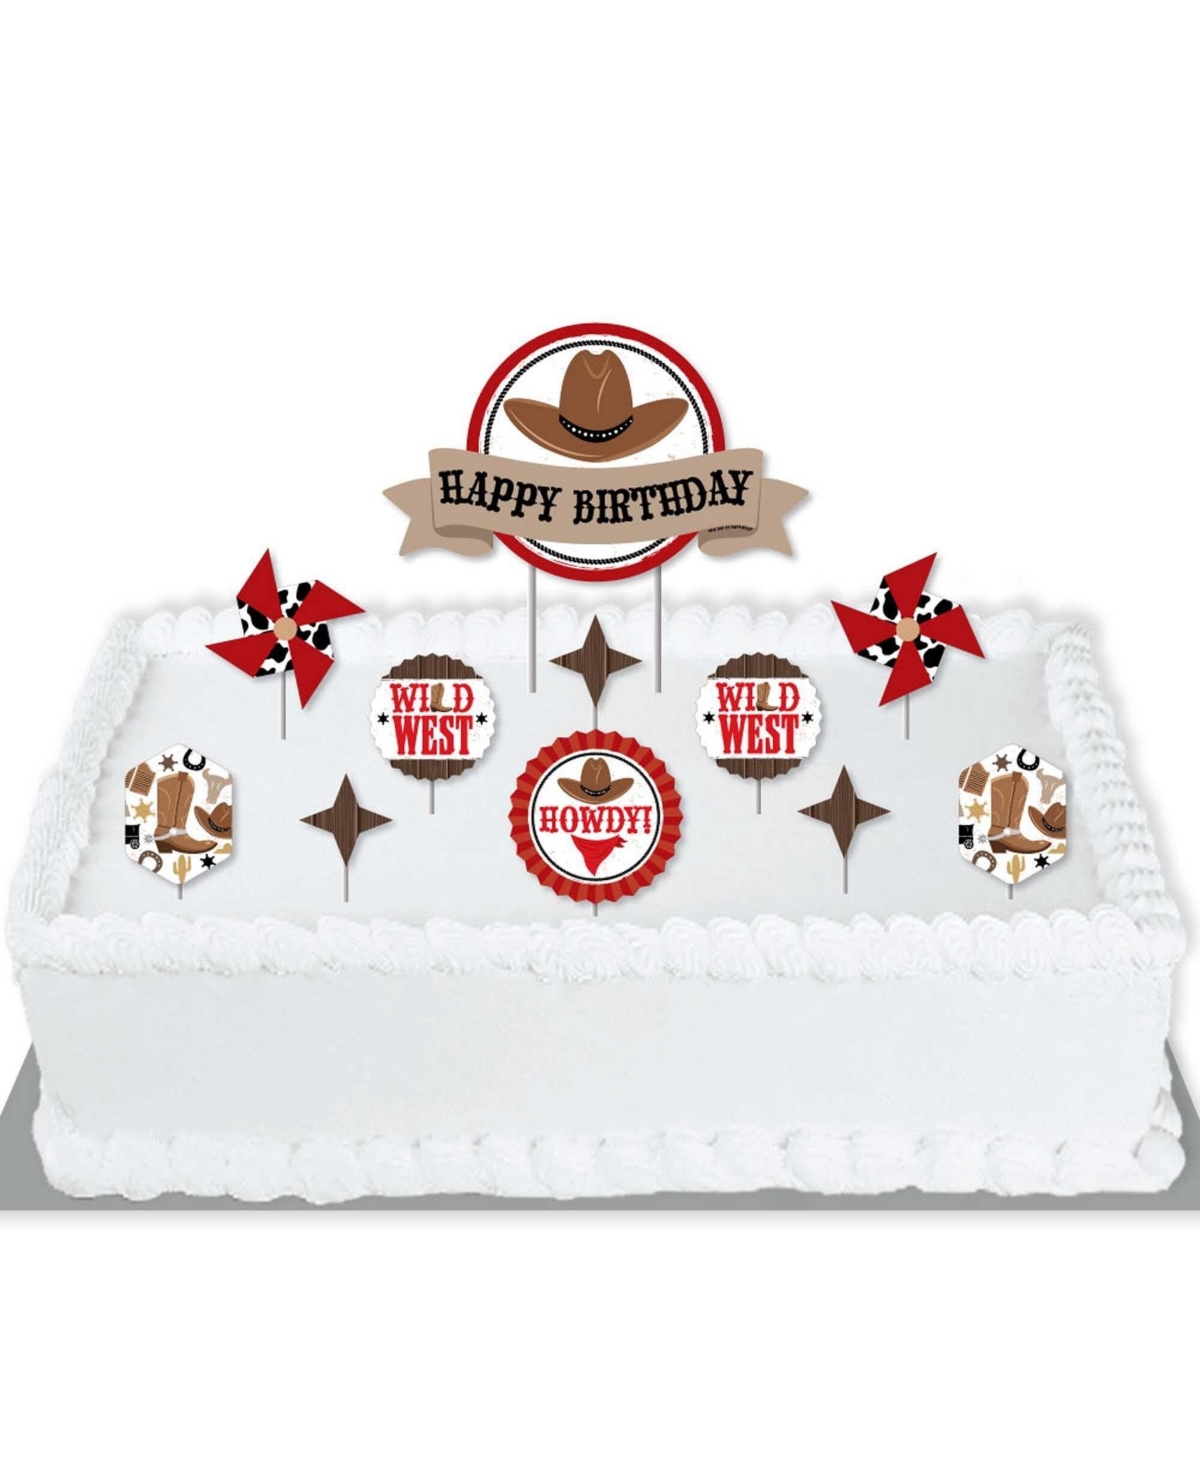 Western Hoedown - Birthday Party Cake Decorating Kit - Cake Topper Set - 11 Pc